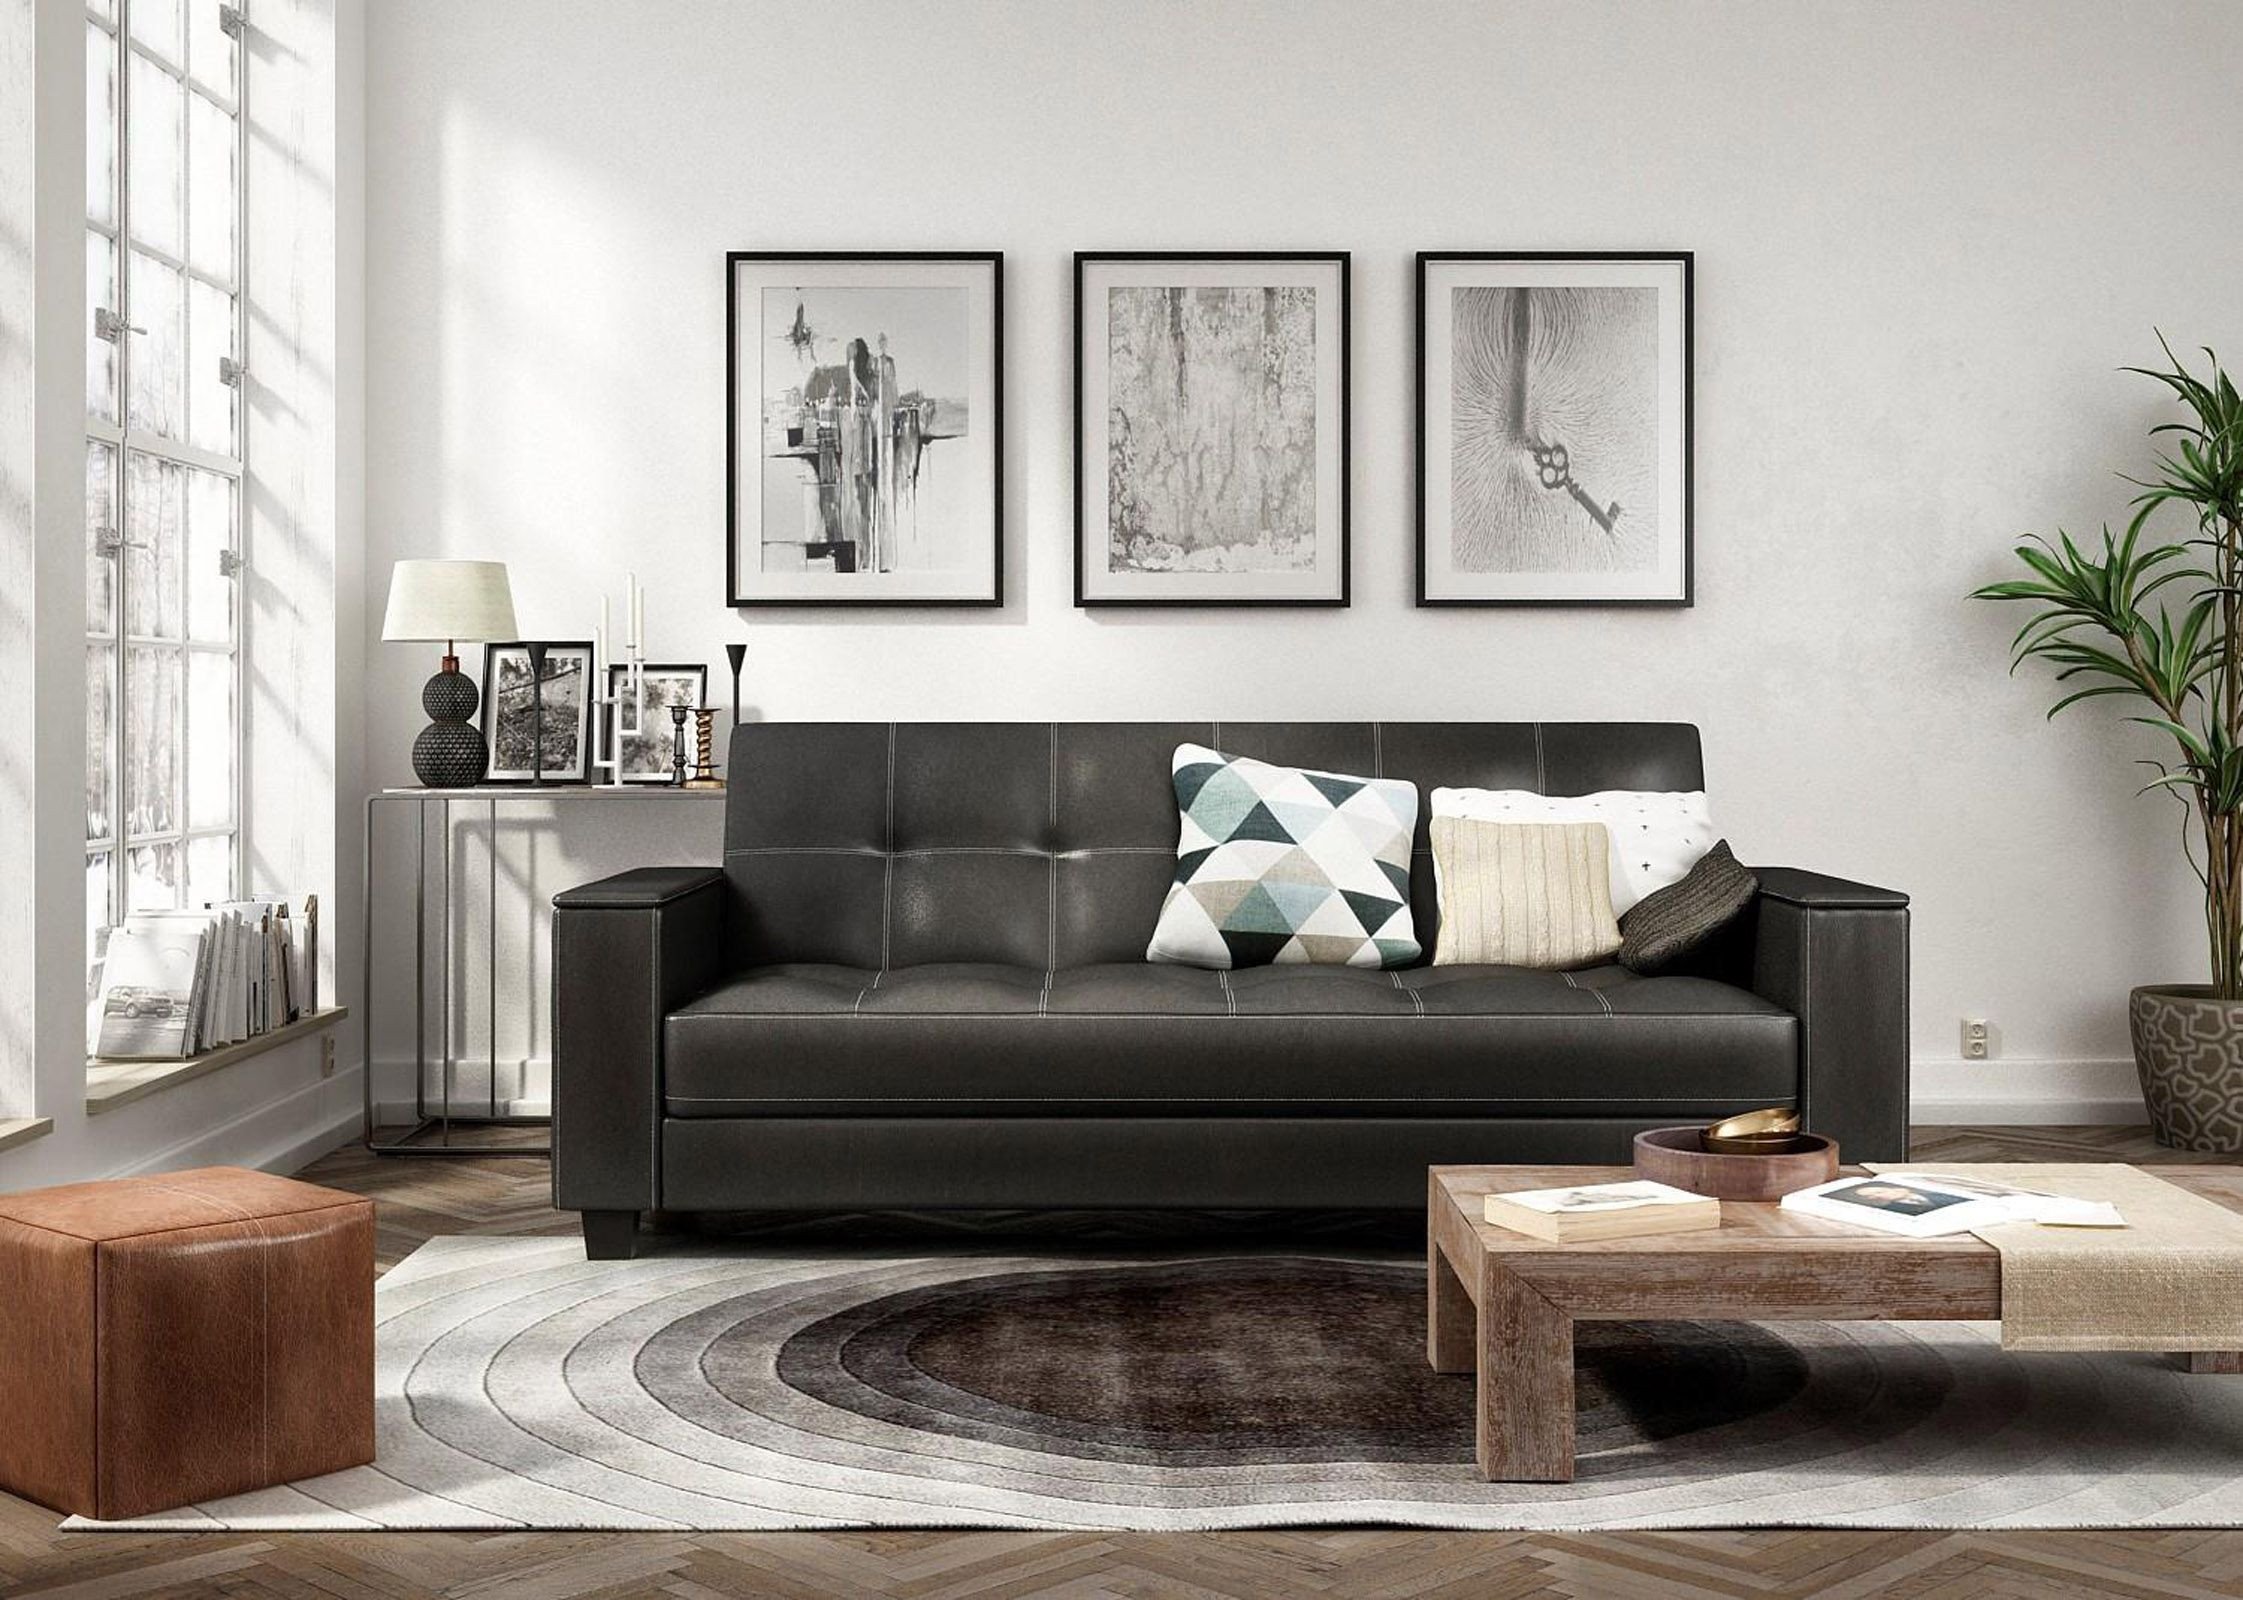 sears furniture living room set